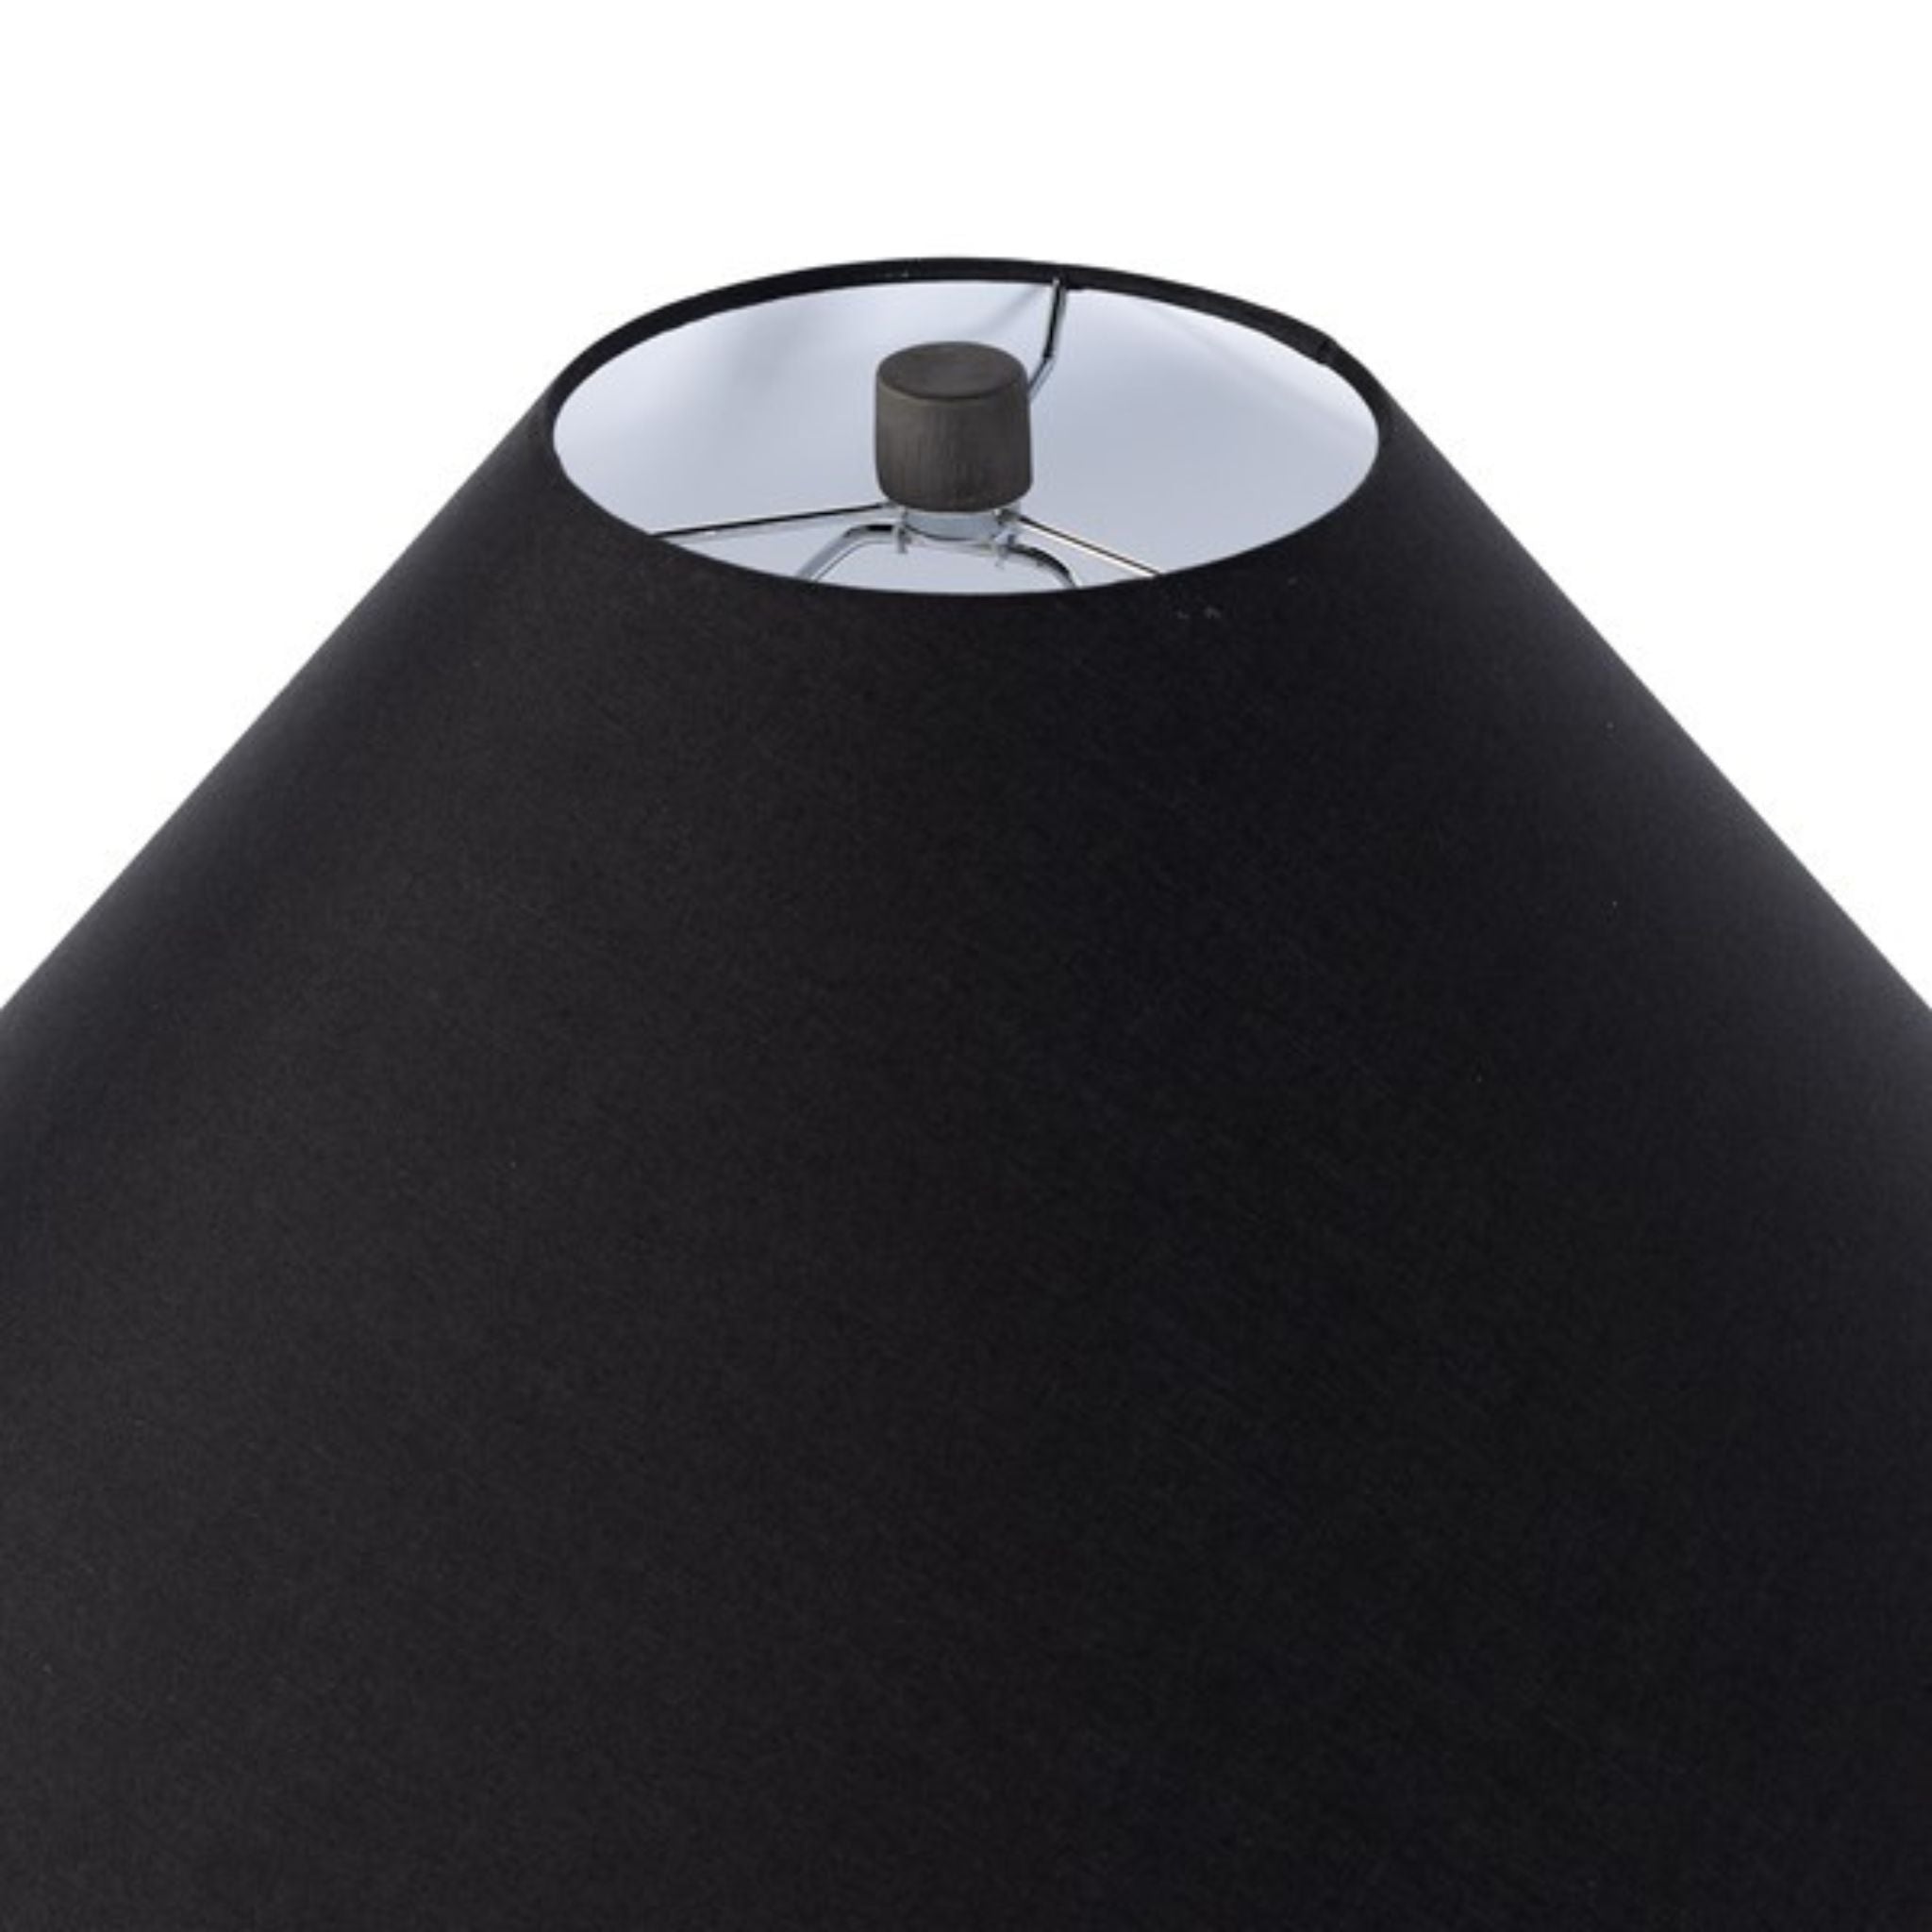 Muji Table Lamp- Black Shade